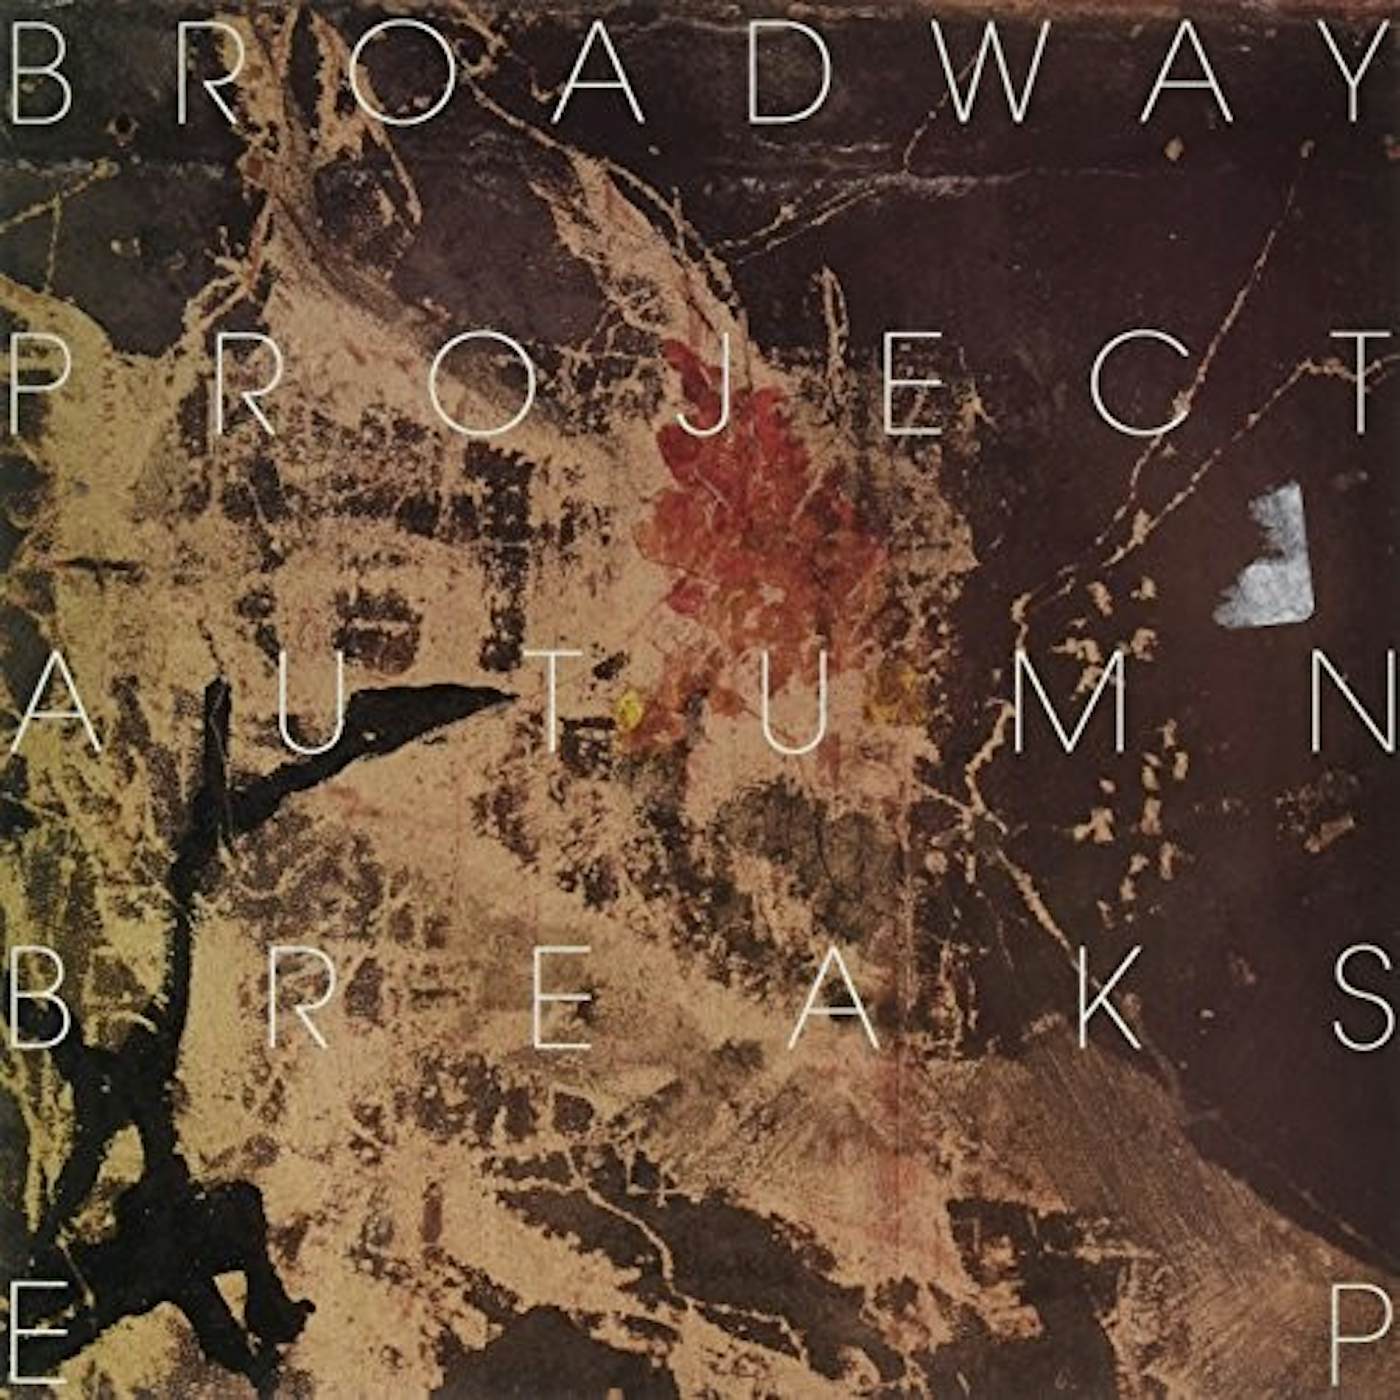 Broadway Project Autumn Breaks Ep Vinyl Record